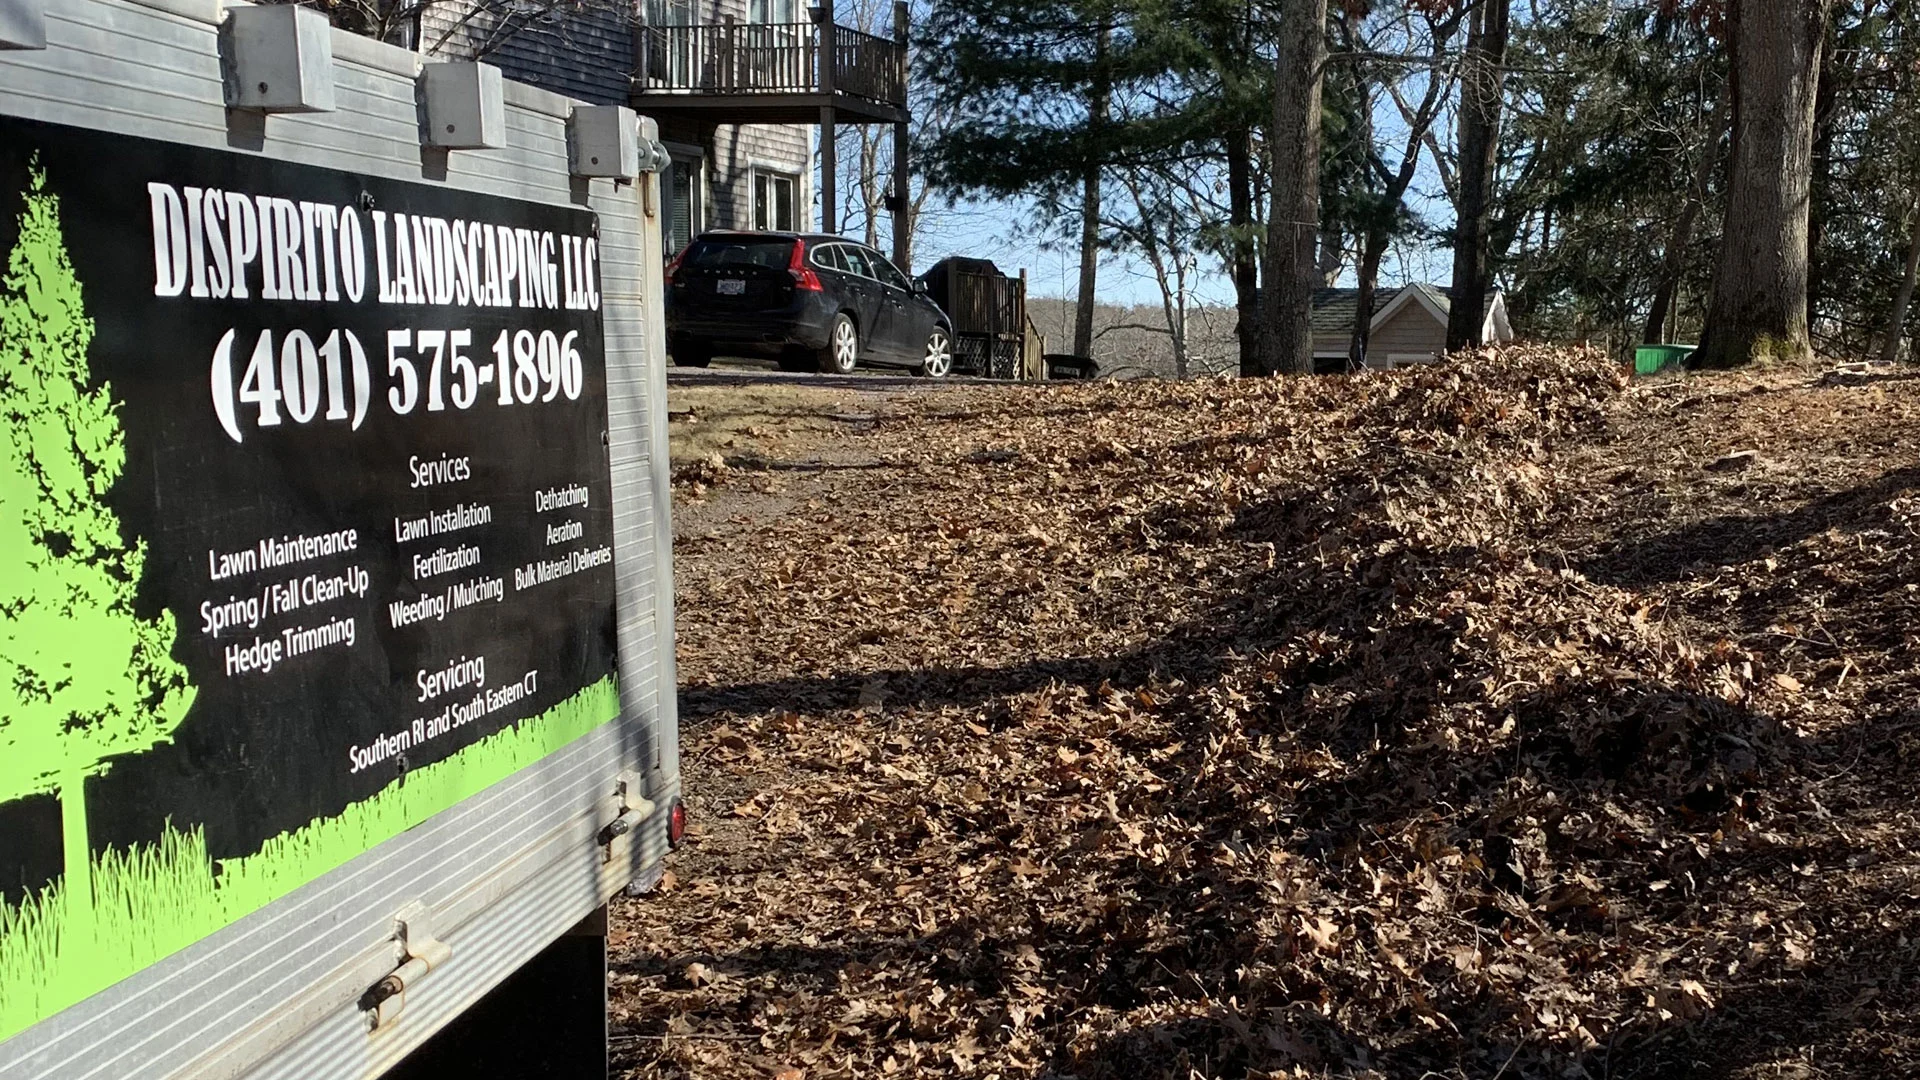 DiSpirito Landscaping LLC landscaping work trailer in Westerly, RI.